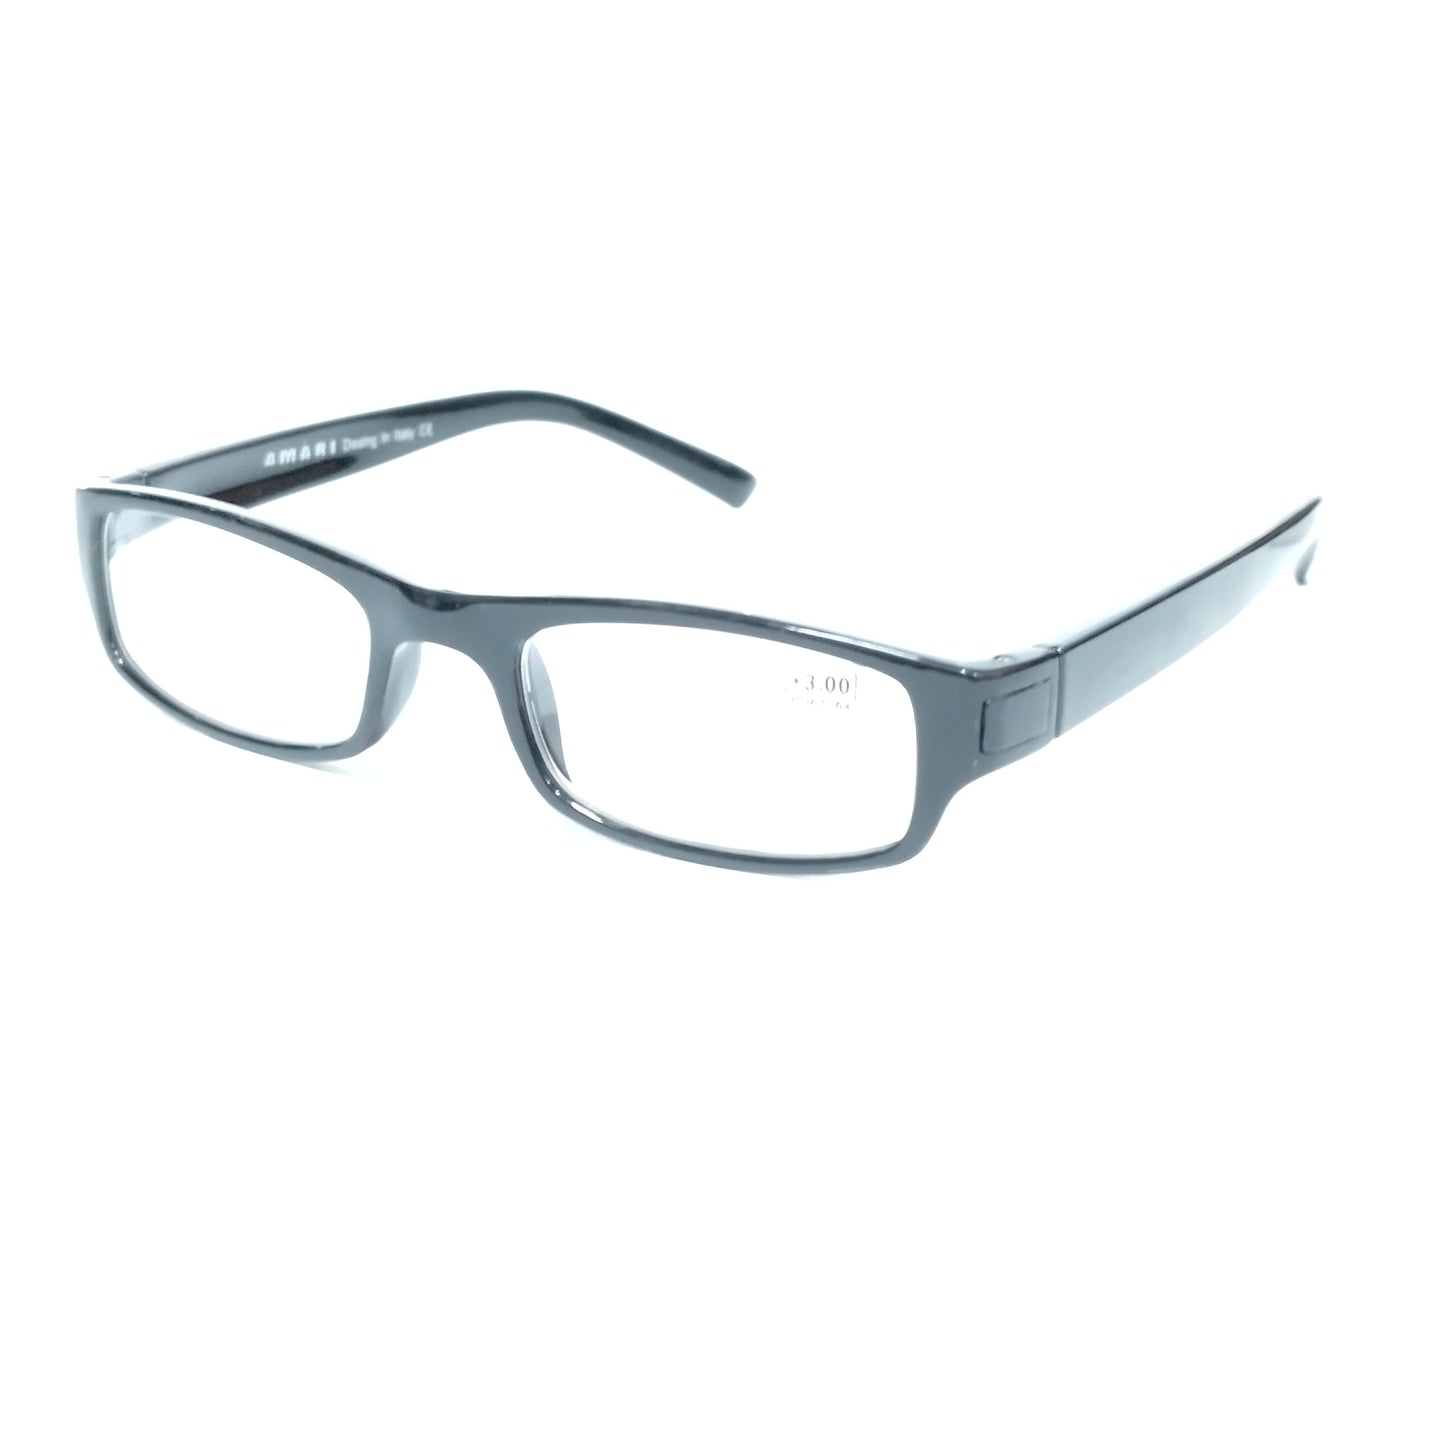 Black Color Frame Blue Light Computer Reading Glasses with Anti Glare Lenses